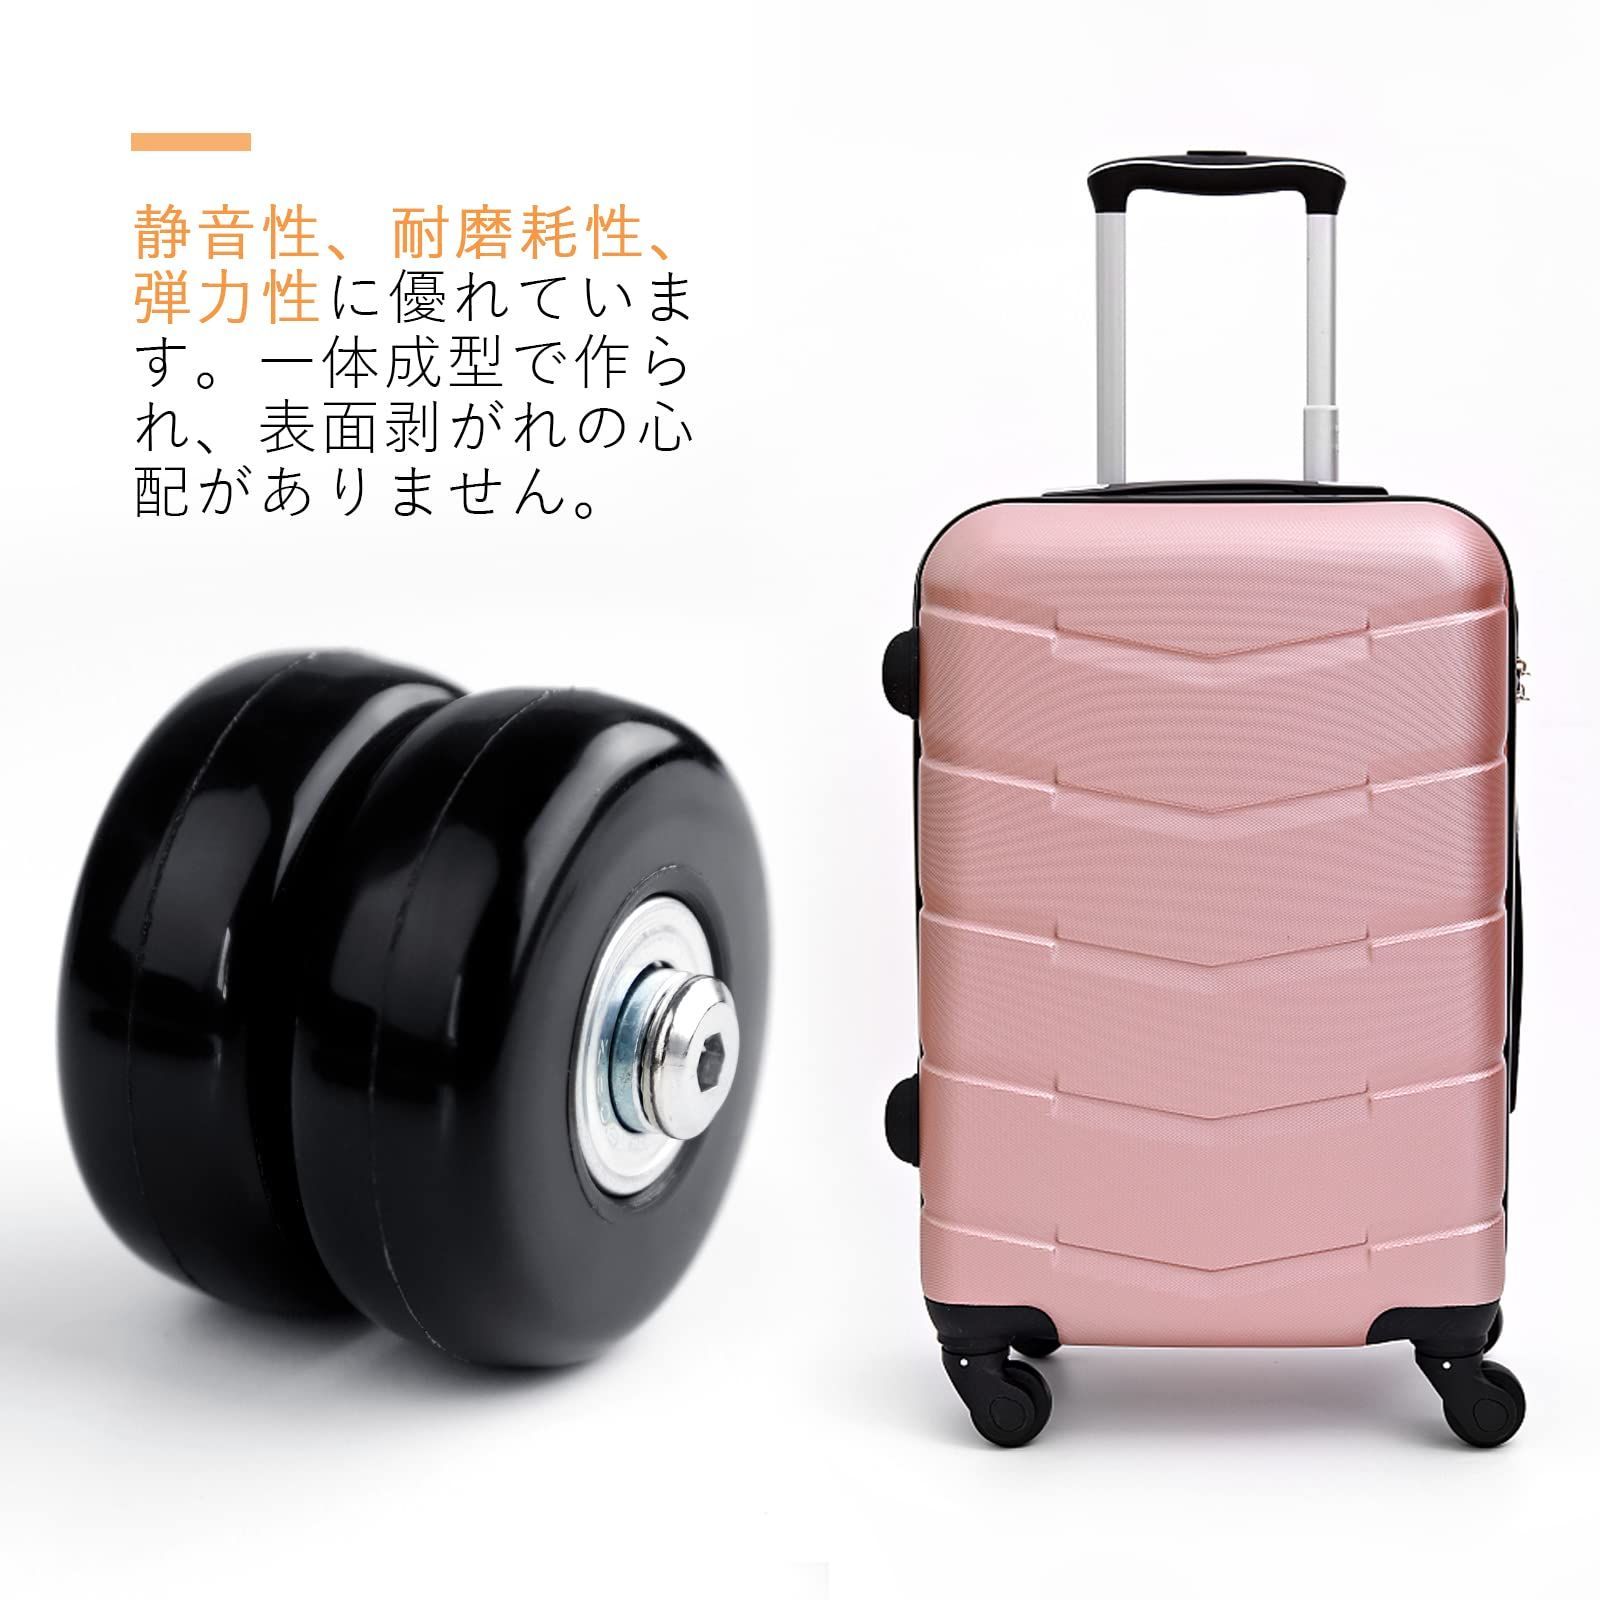 YongXuan] 静音シリーズキャスター 車輪用交換タイヤキット - 旅行かばん・小分けバッグ